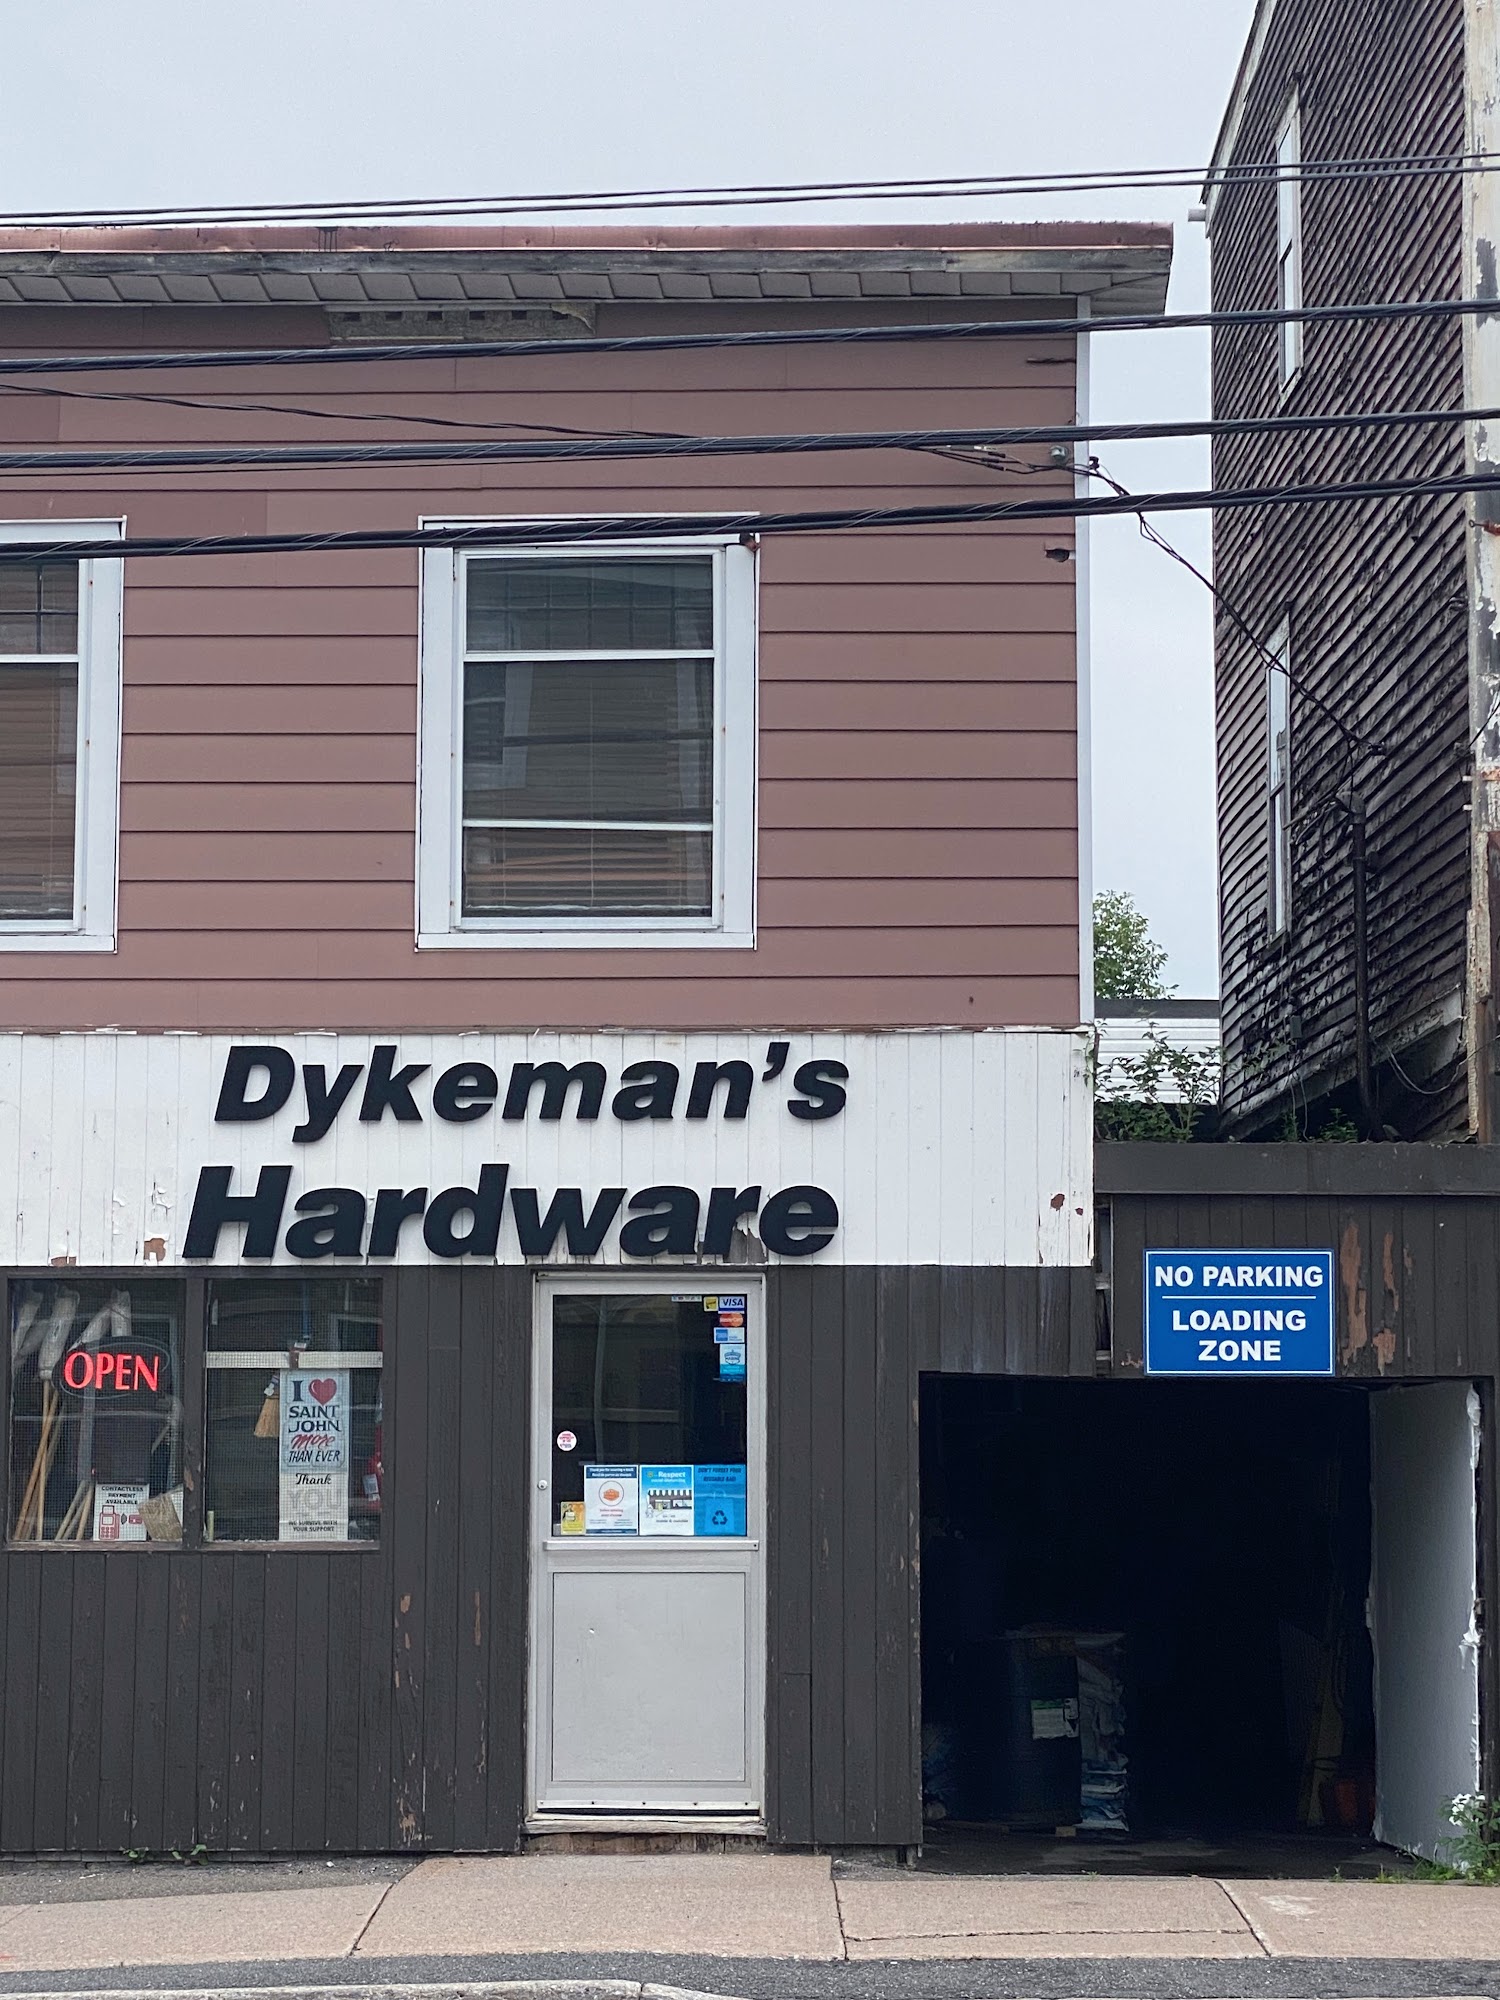 Dykeman's Hardware Ltd